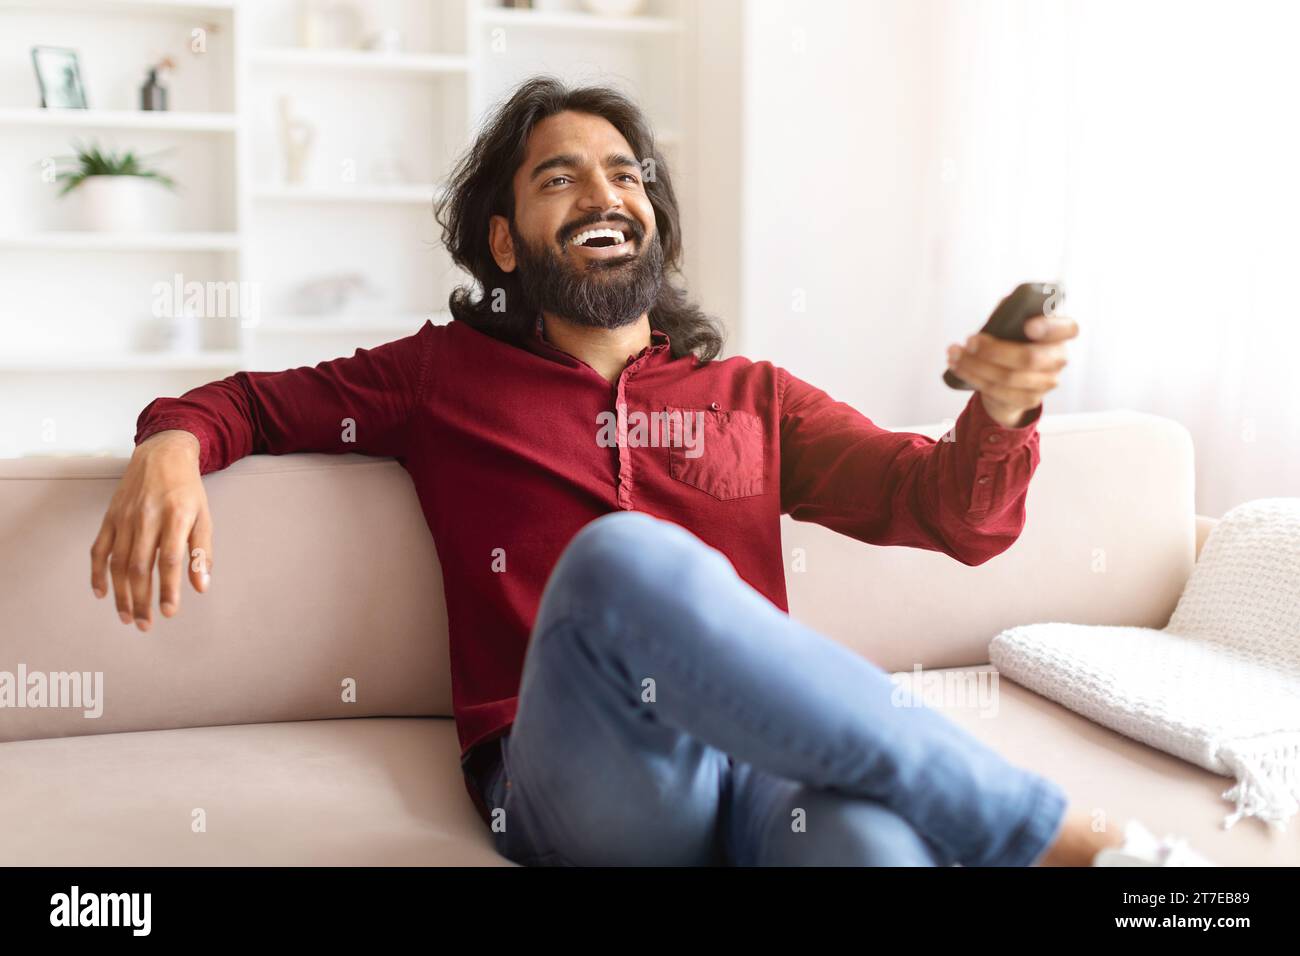 Emotional indian man watching TV at home, laughing Stock Photo